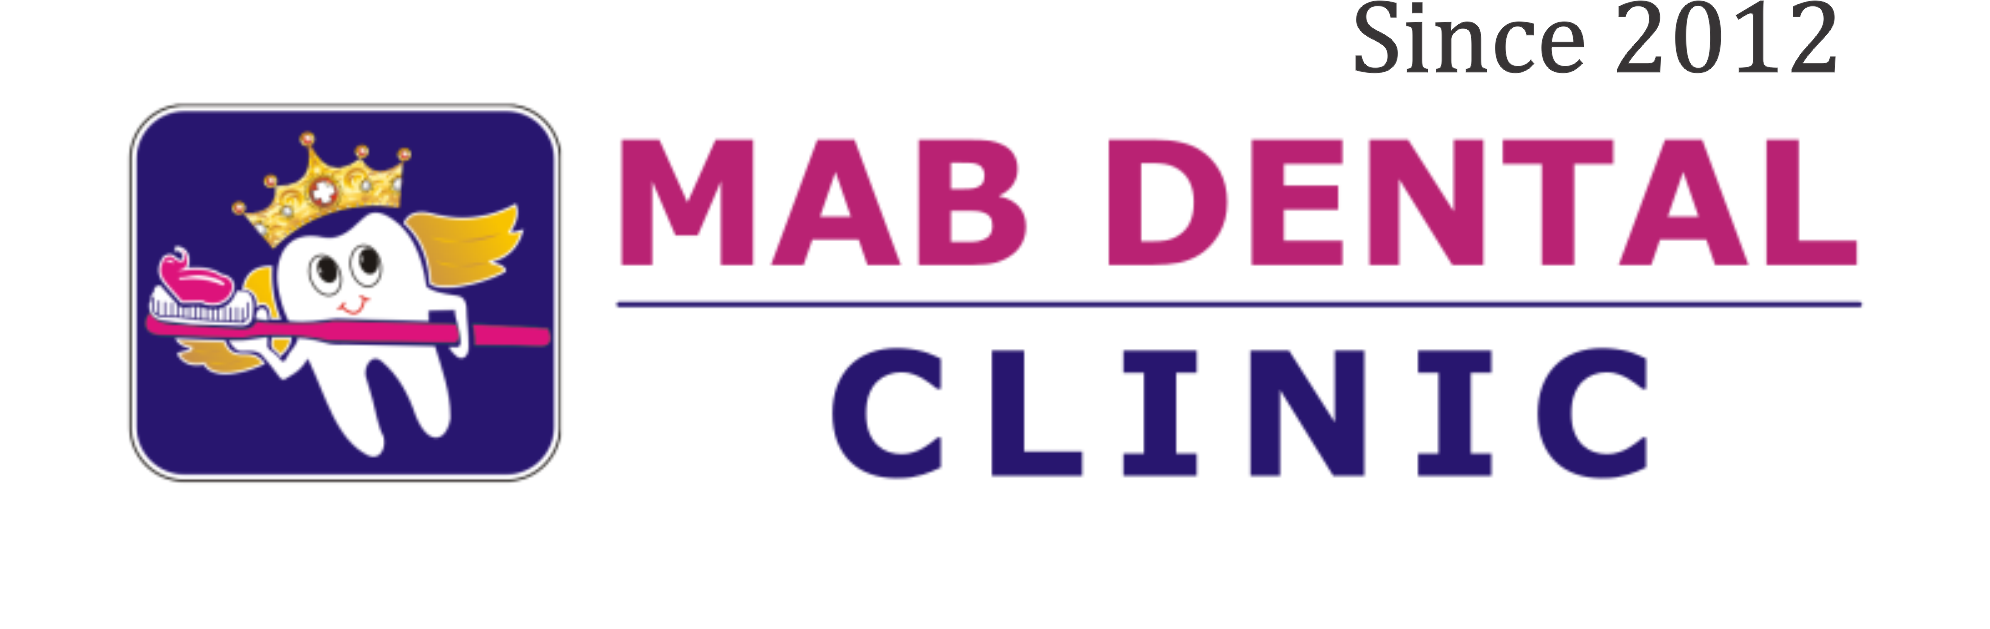 MAB Dental Clinic